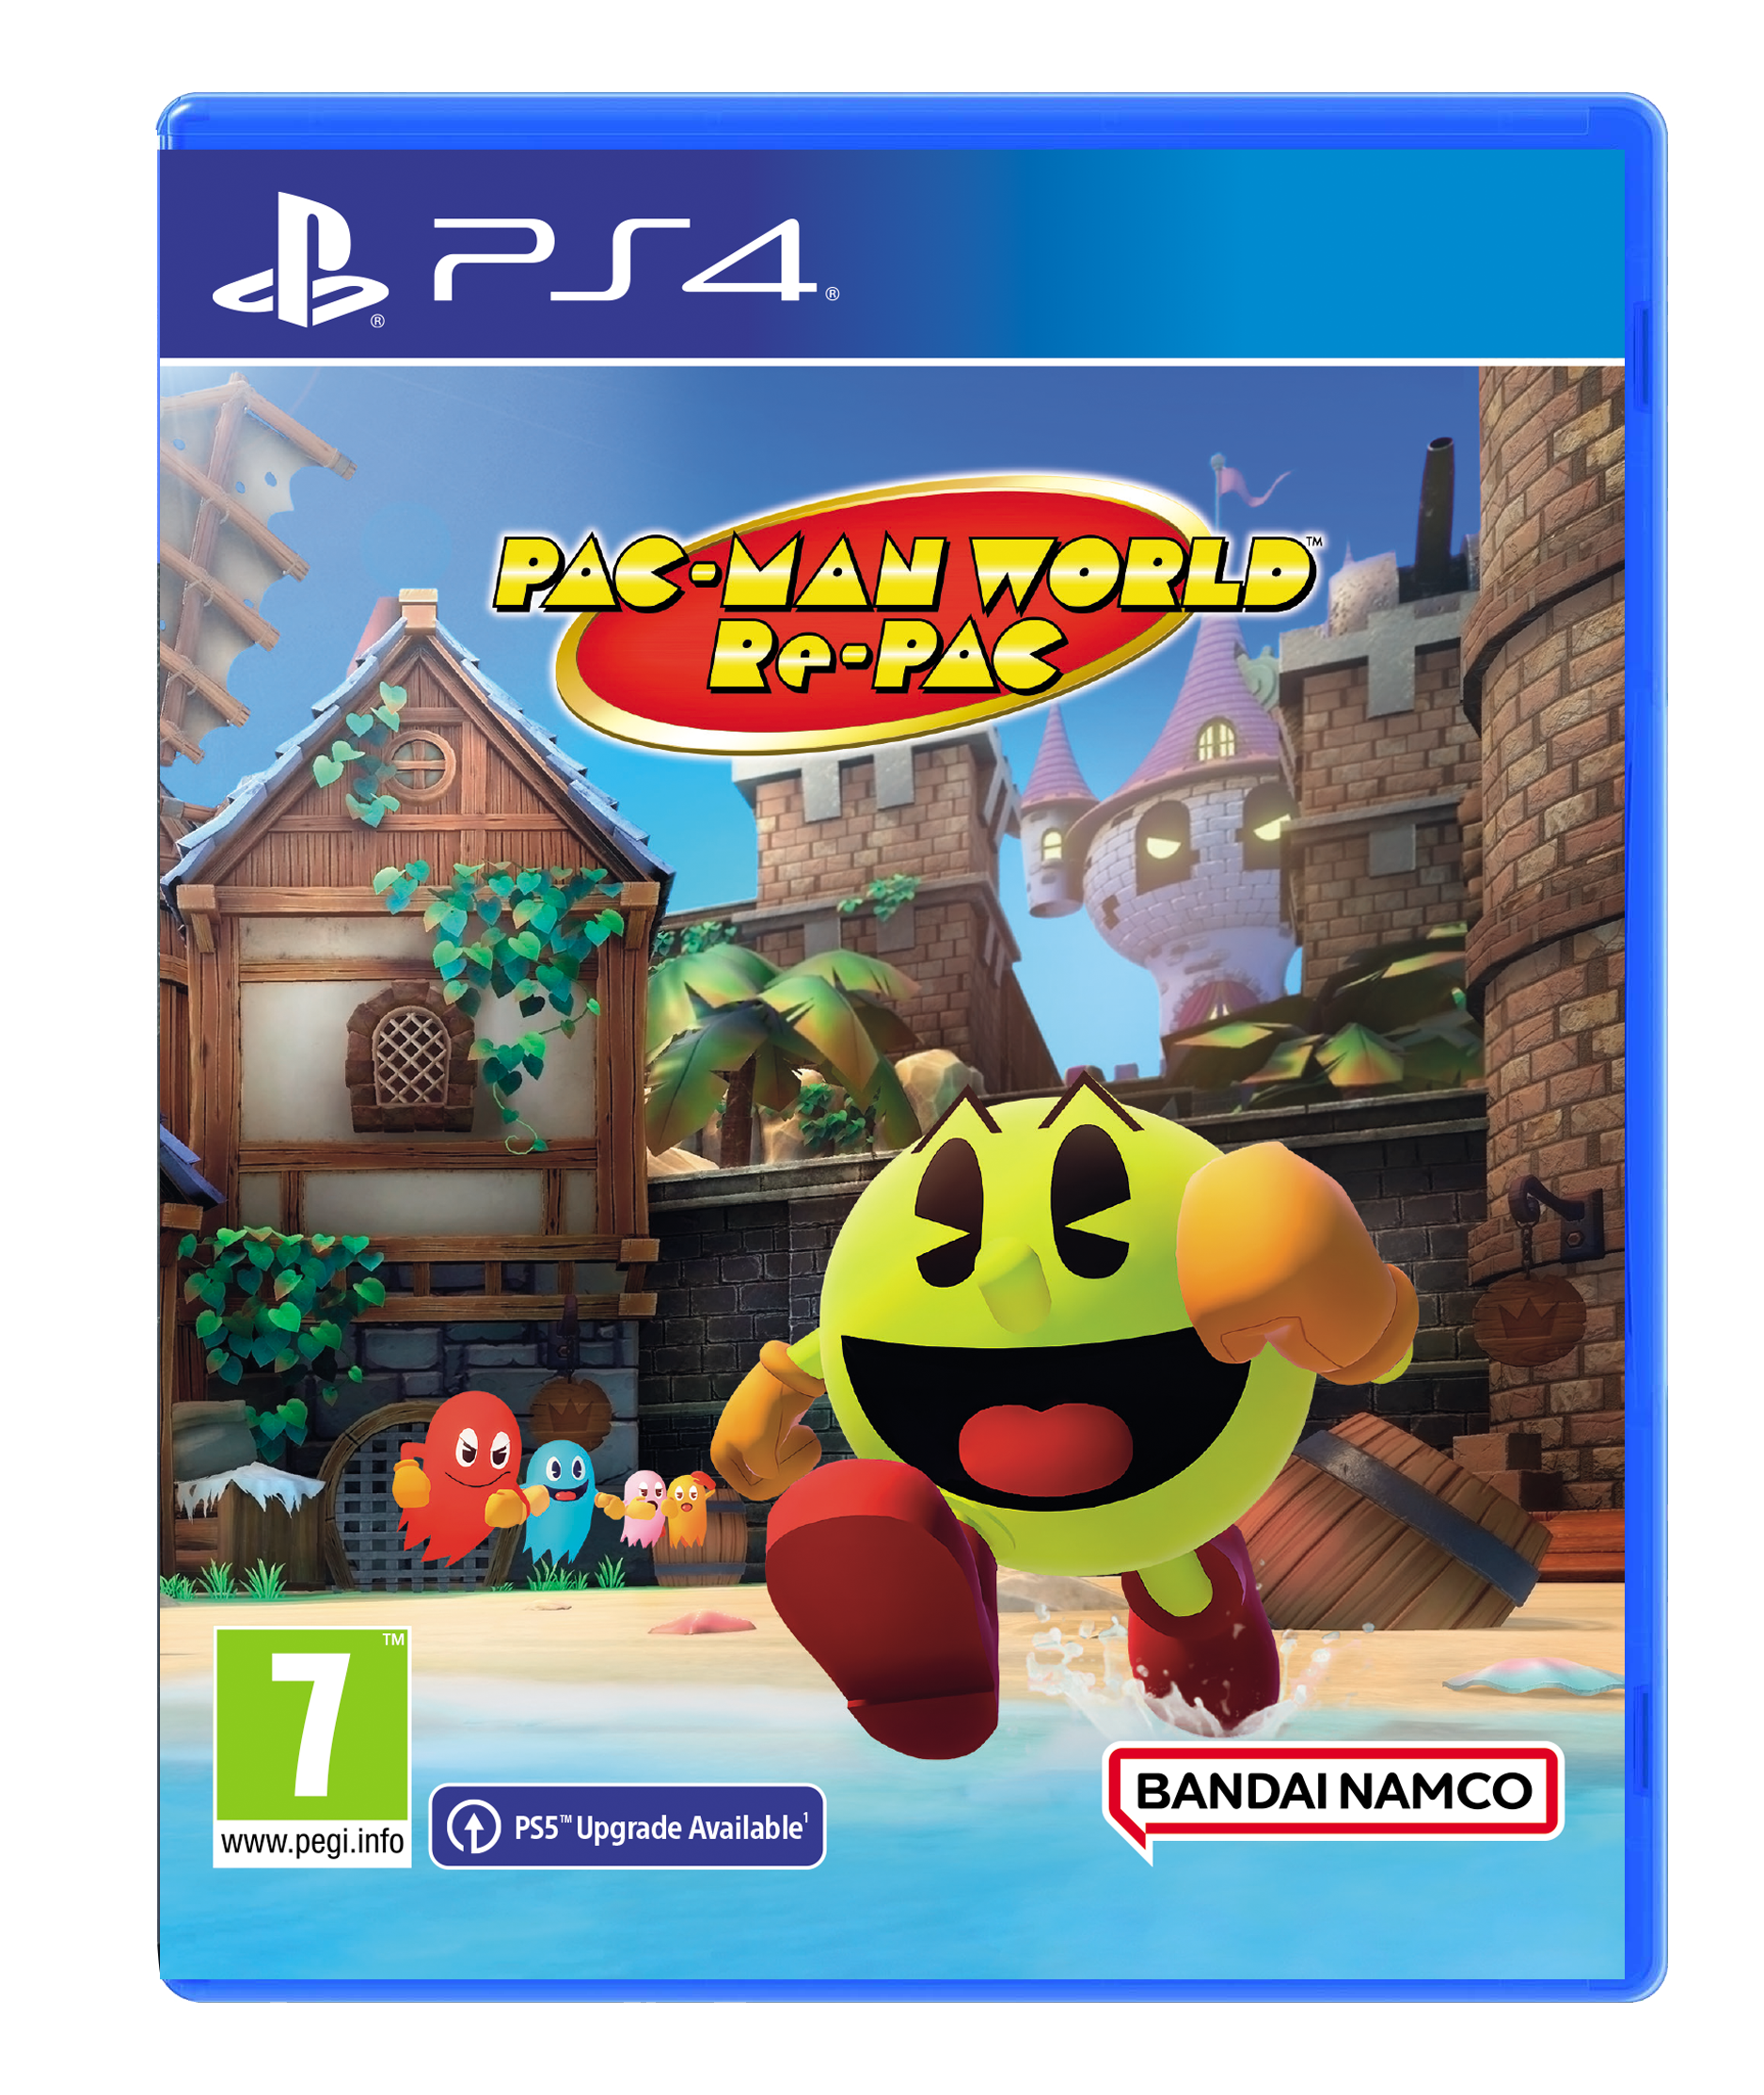 PAC-MAN WORLD Re-PAC – Playstation 4